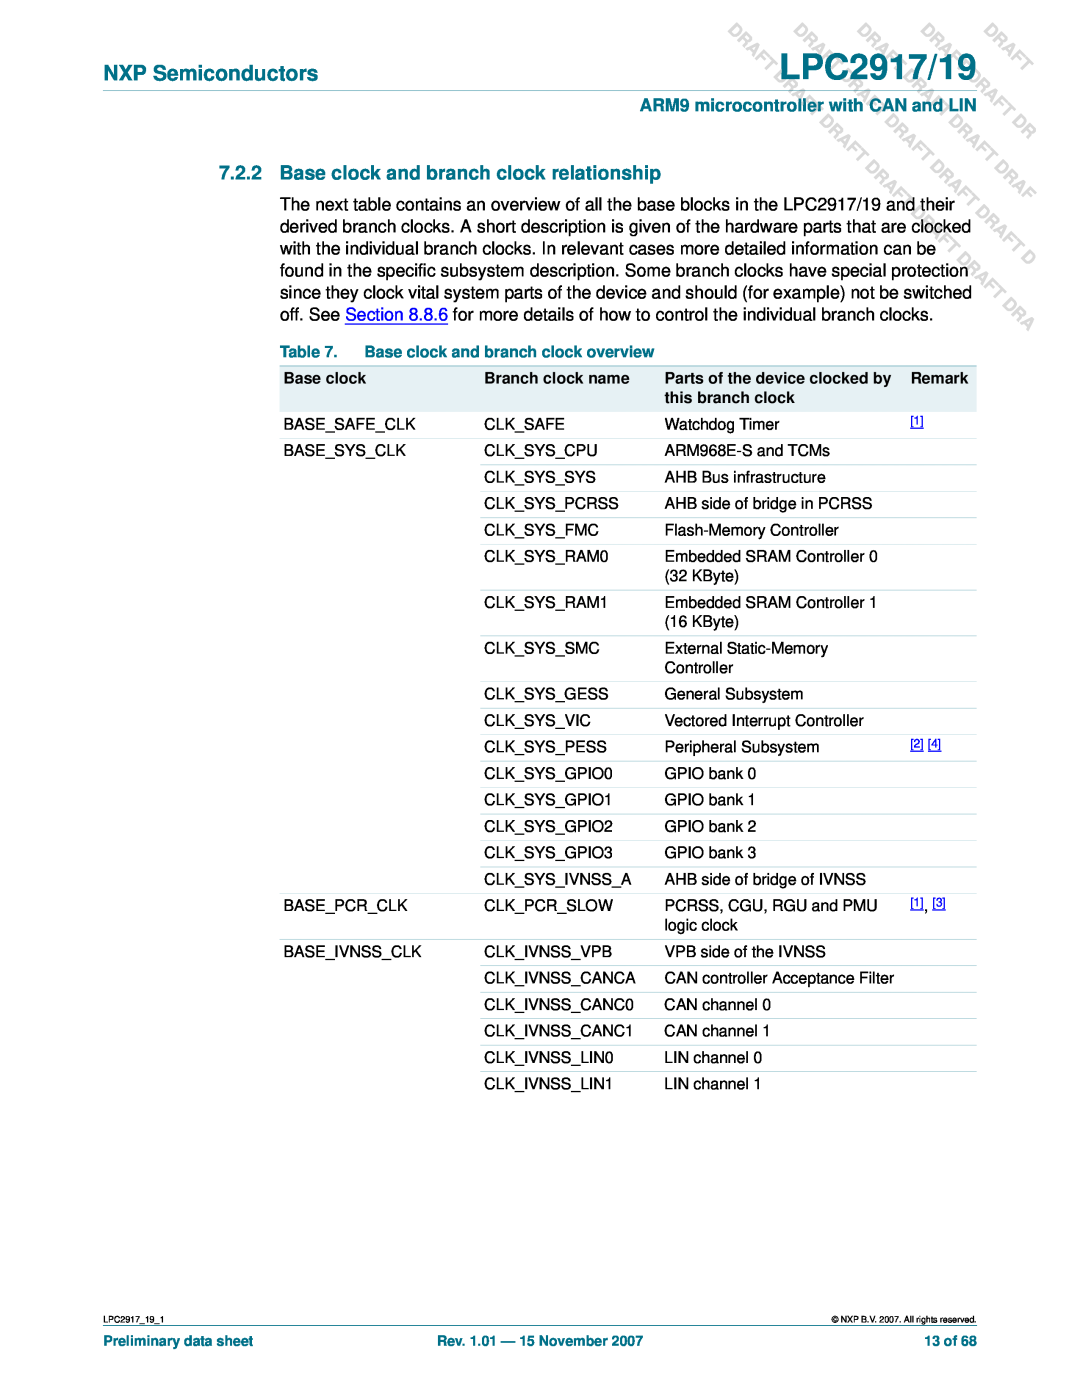 NXP Semiconductors LPC2919 user manual Base clock and branch clock relationship, DLPC2917/19, Draft Draft Draf 